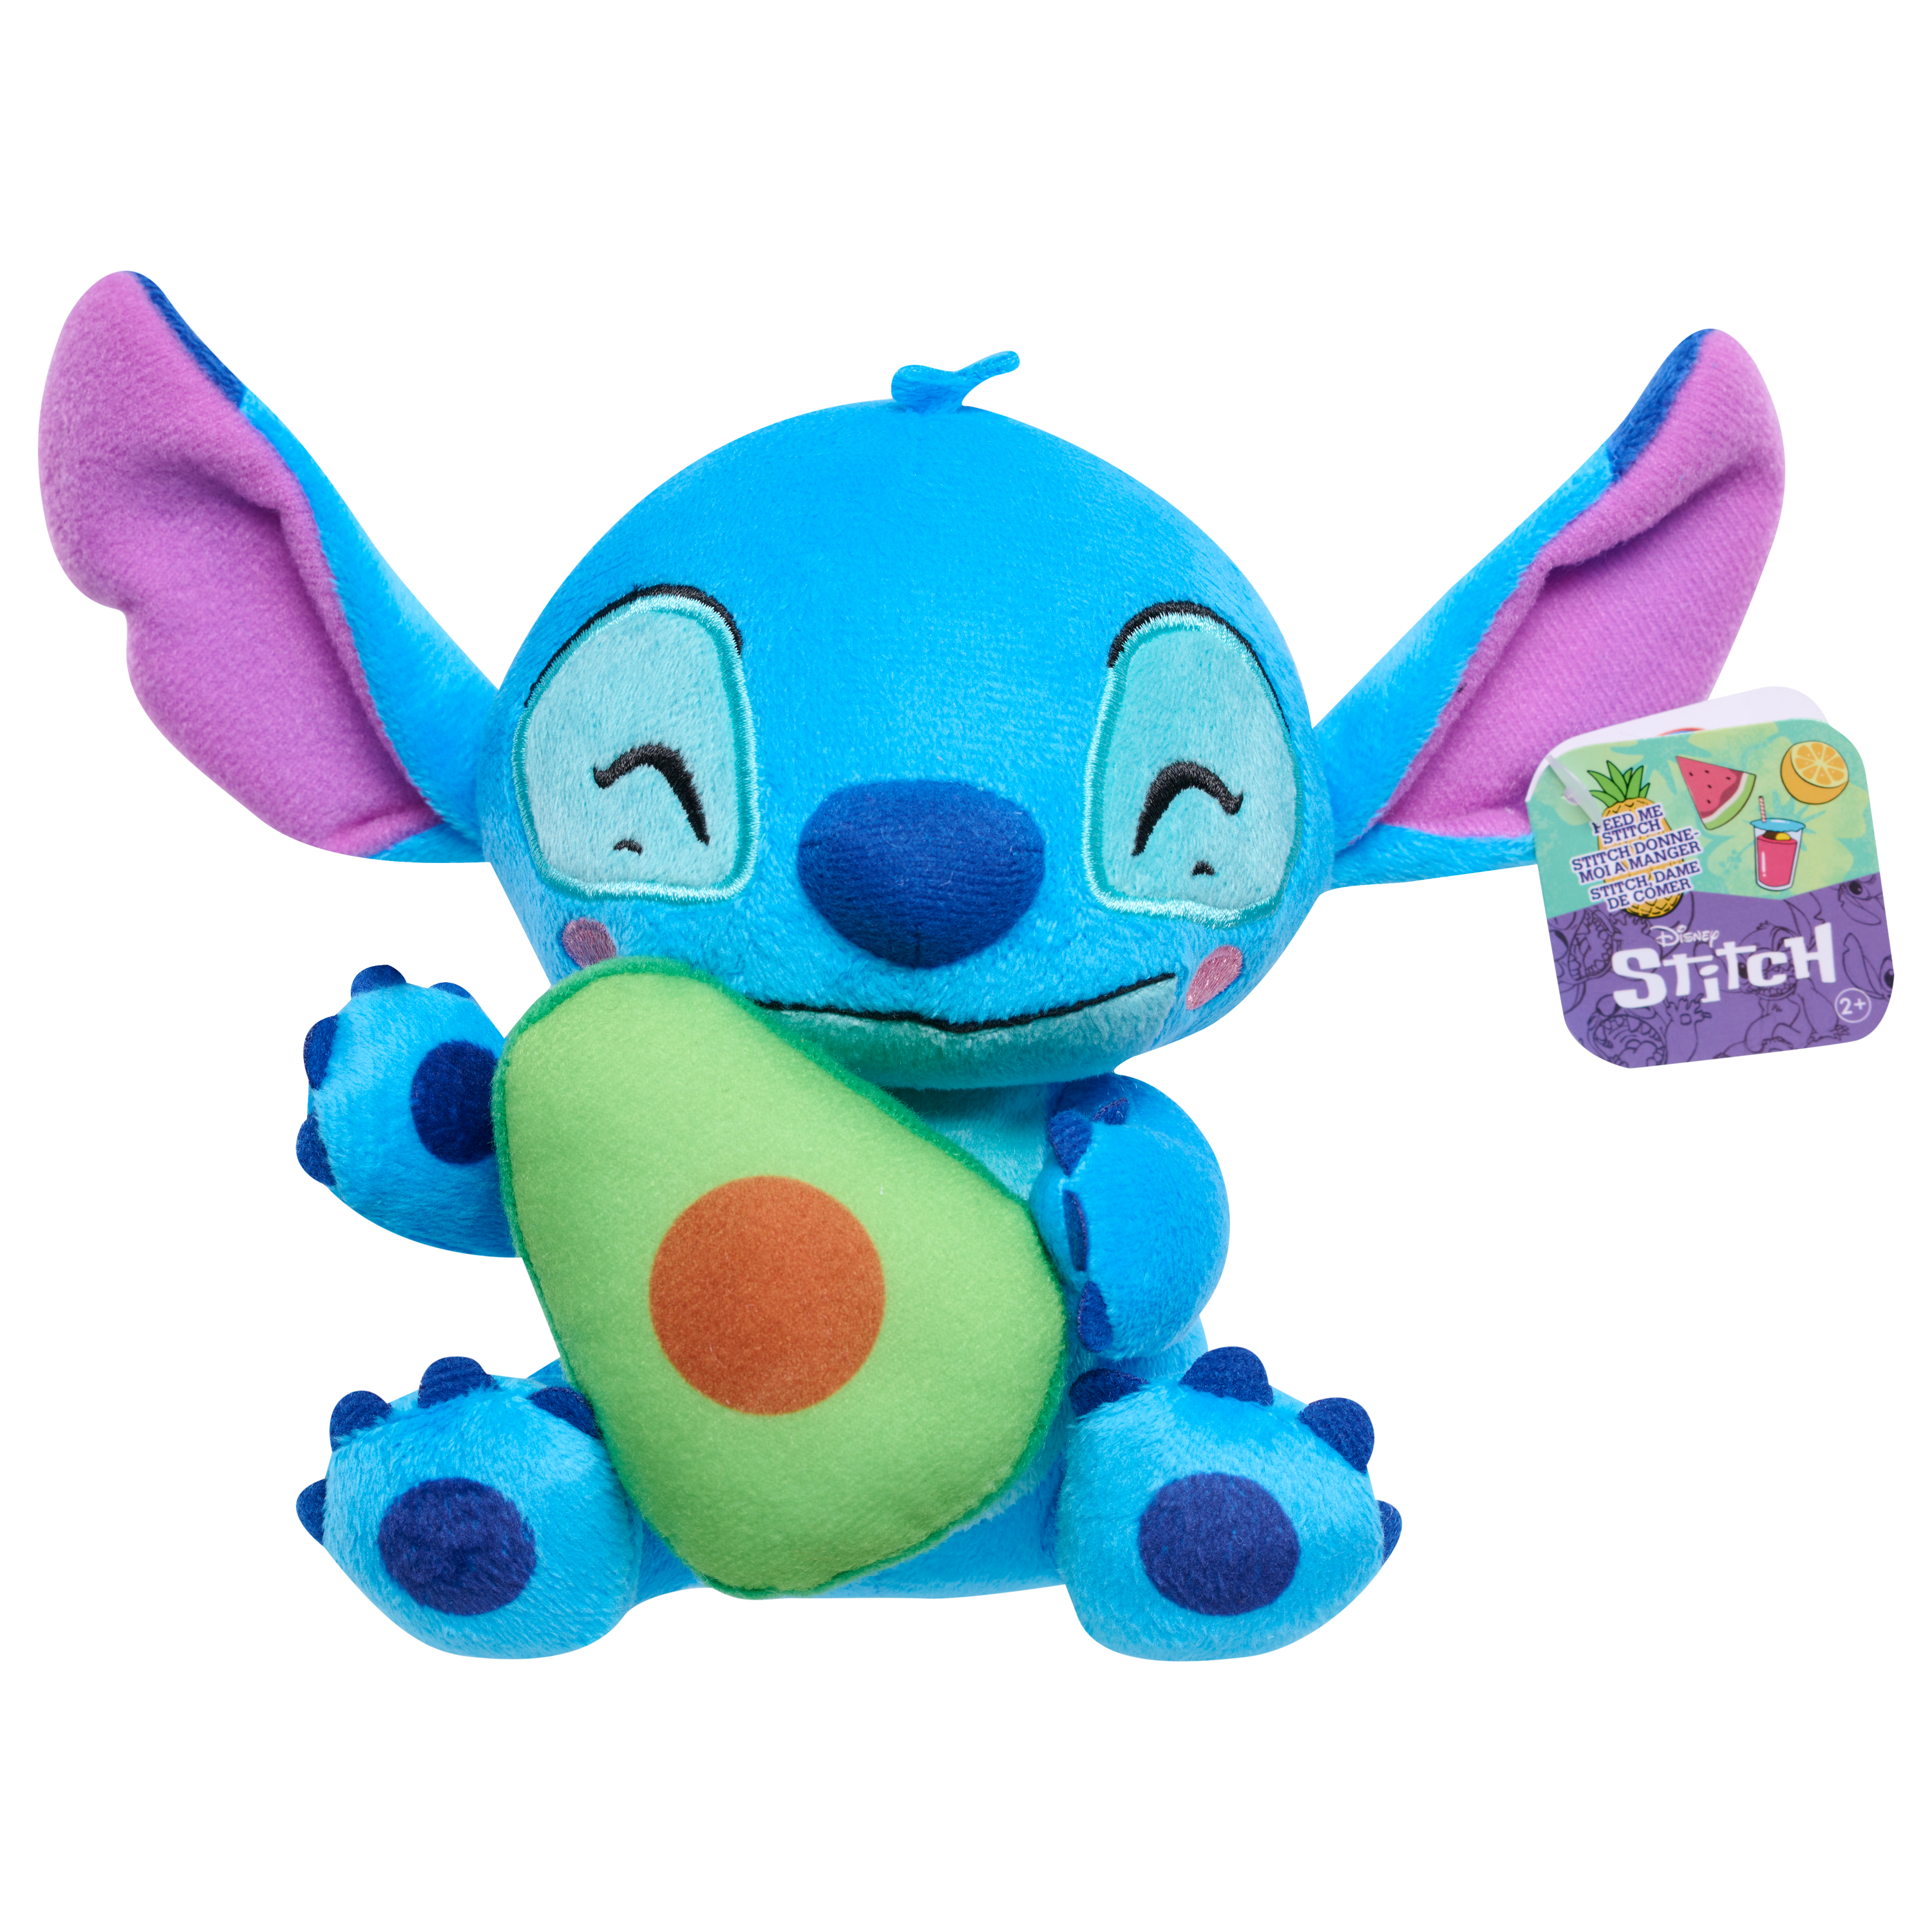 Shop Angel Stitch Plush online